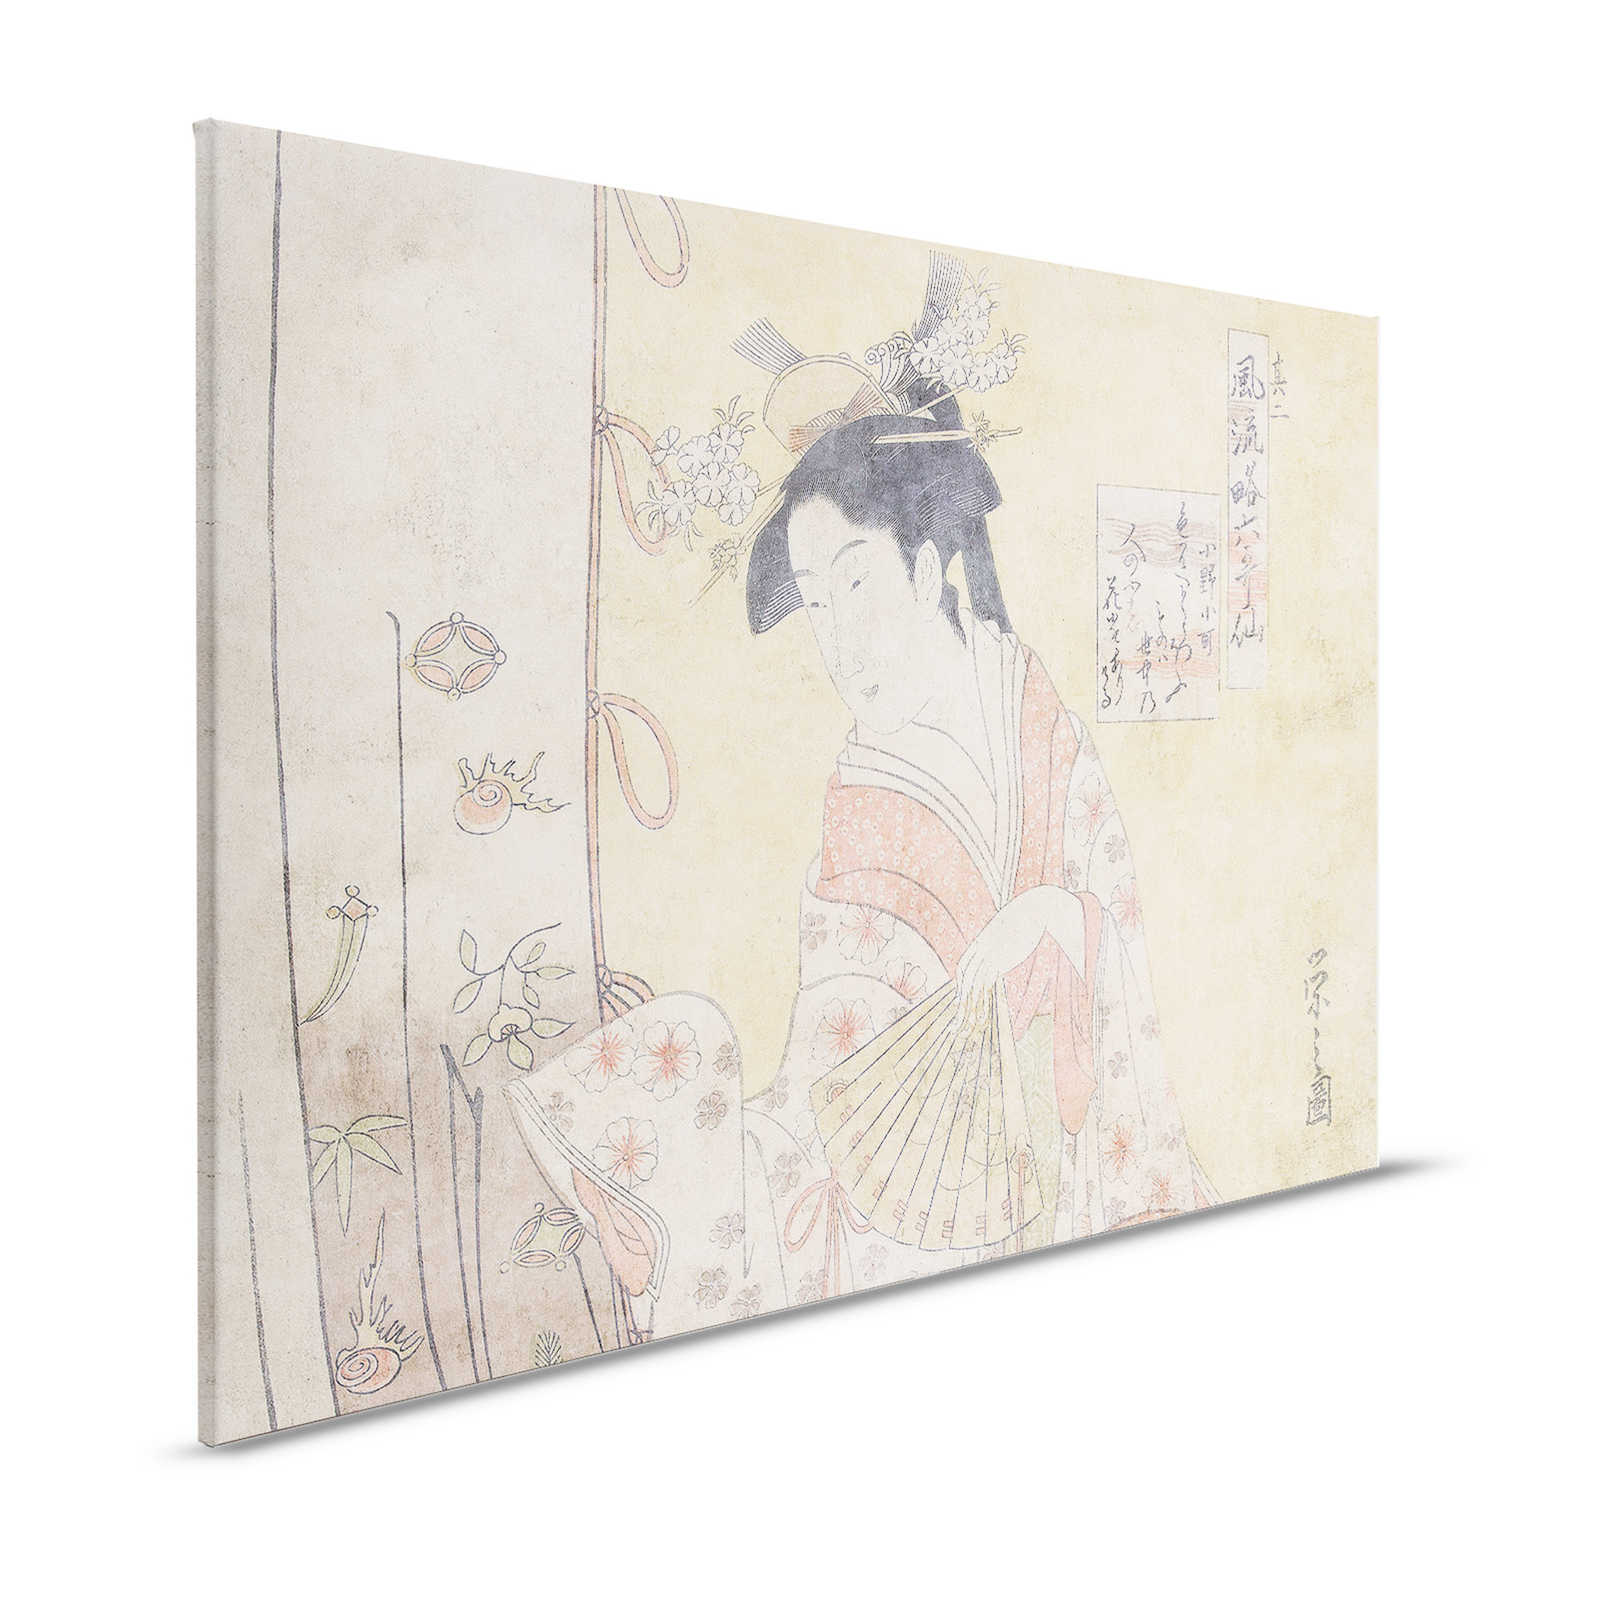 Osaka 2 - Azië Canvas schilderij Vintage kunstwerk Dame met Ventilator - 1.20 m x 0.80 m
